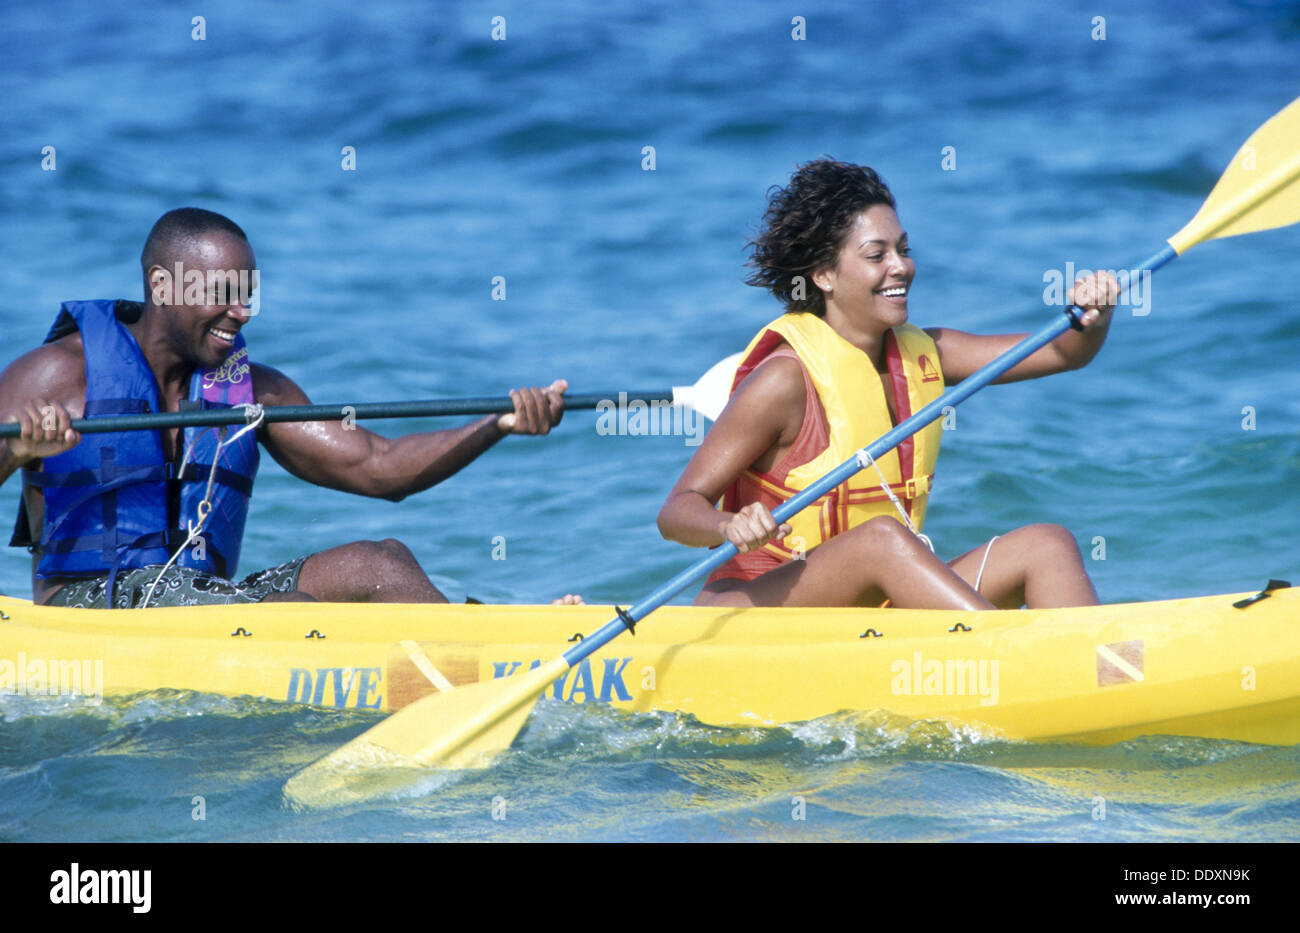 Par remando un kayak tandom Foto de stock